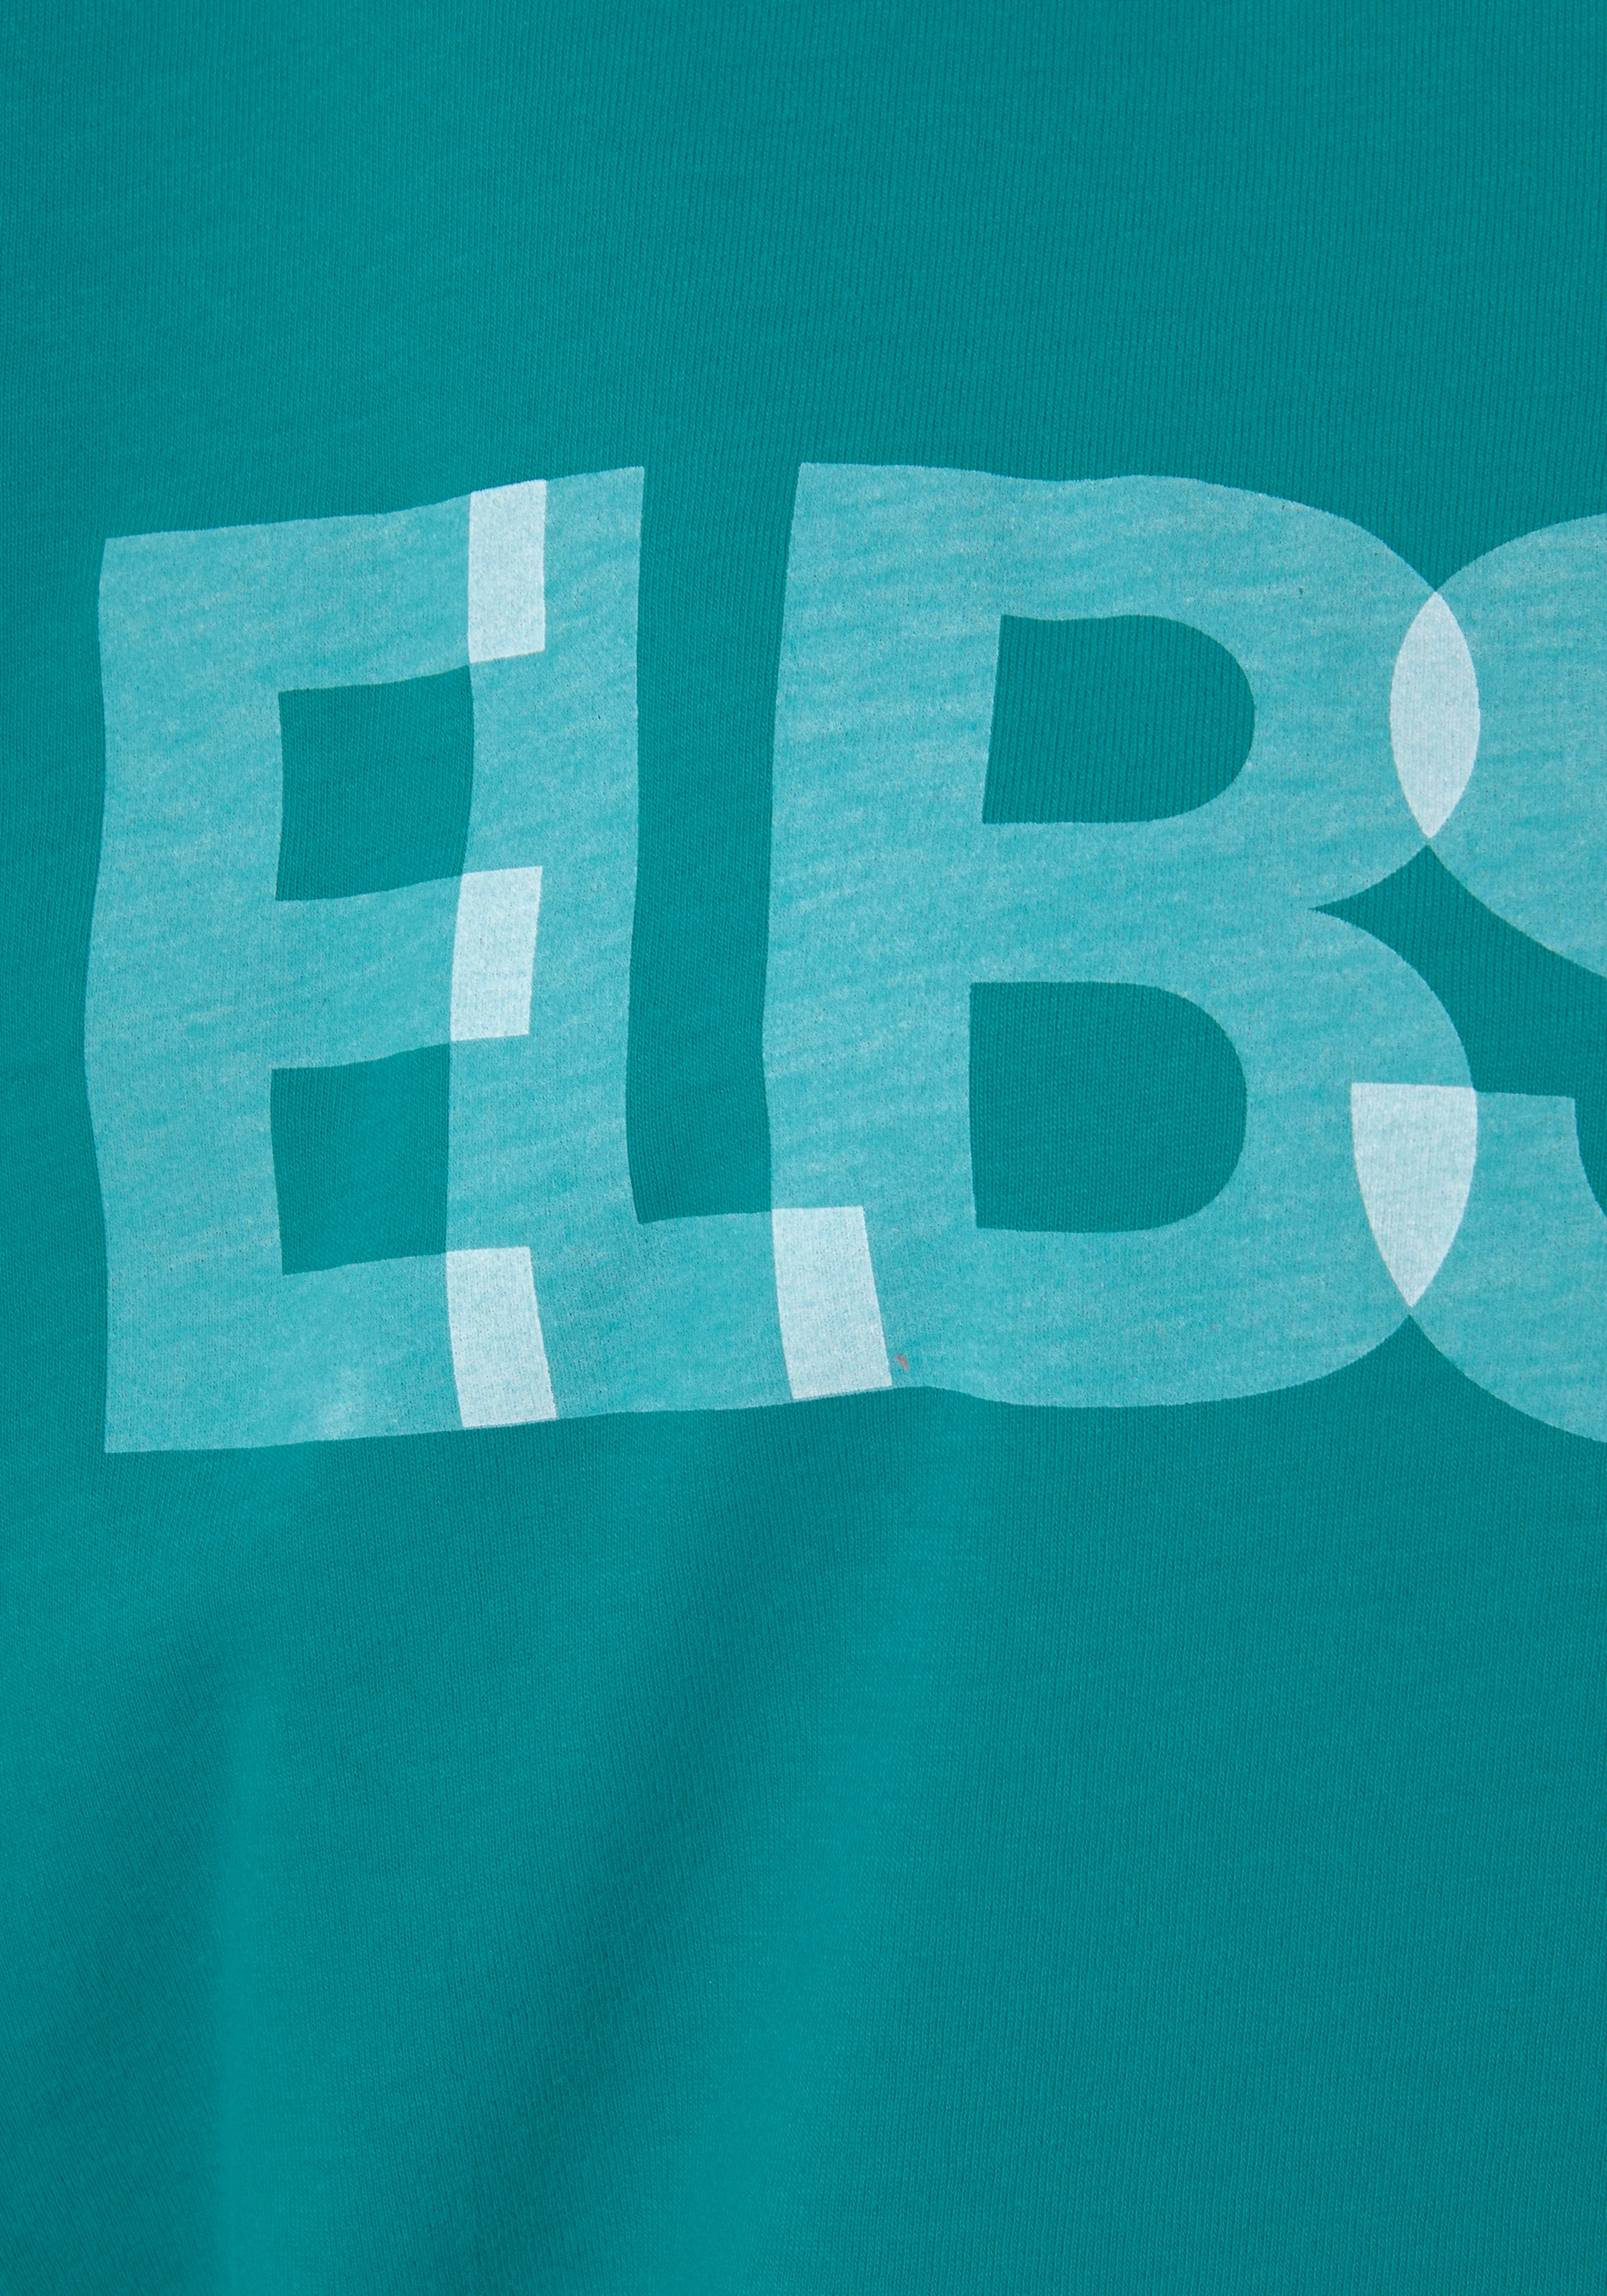 Elbsand 3/4-Arm-Shirt, mit Logodruck, Baumwoll-Mix, lockere Passform  shoppen